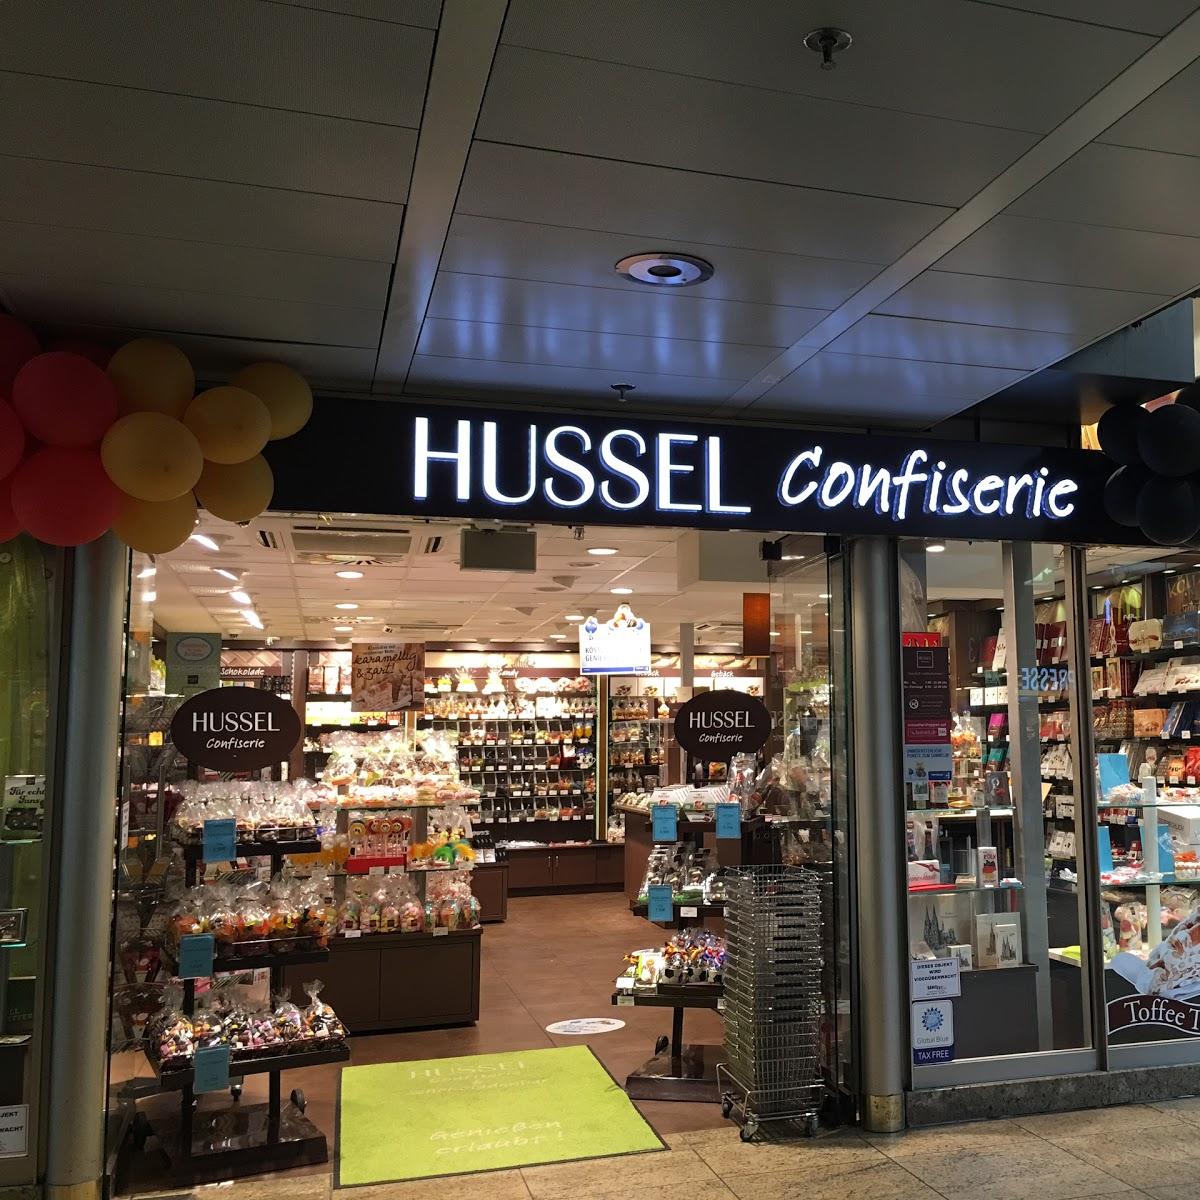 Restaurant "HUSSEL Confiserie" in Köln